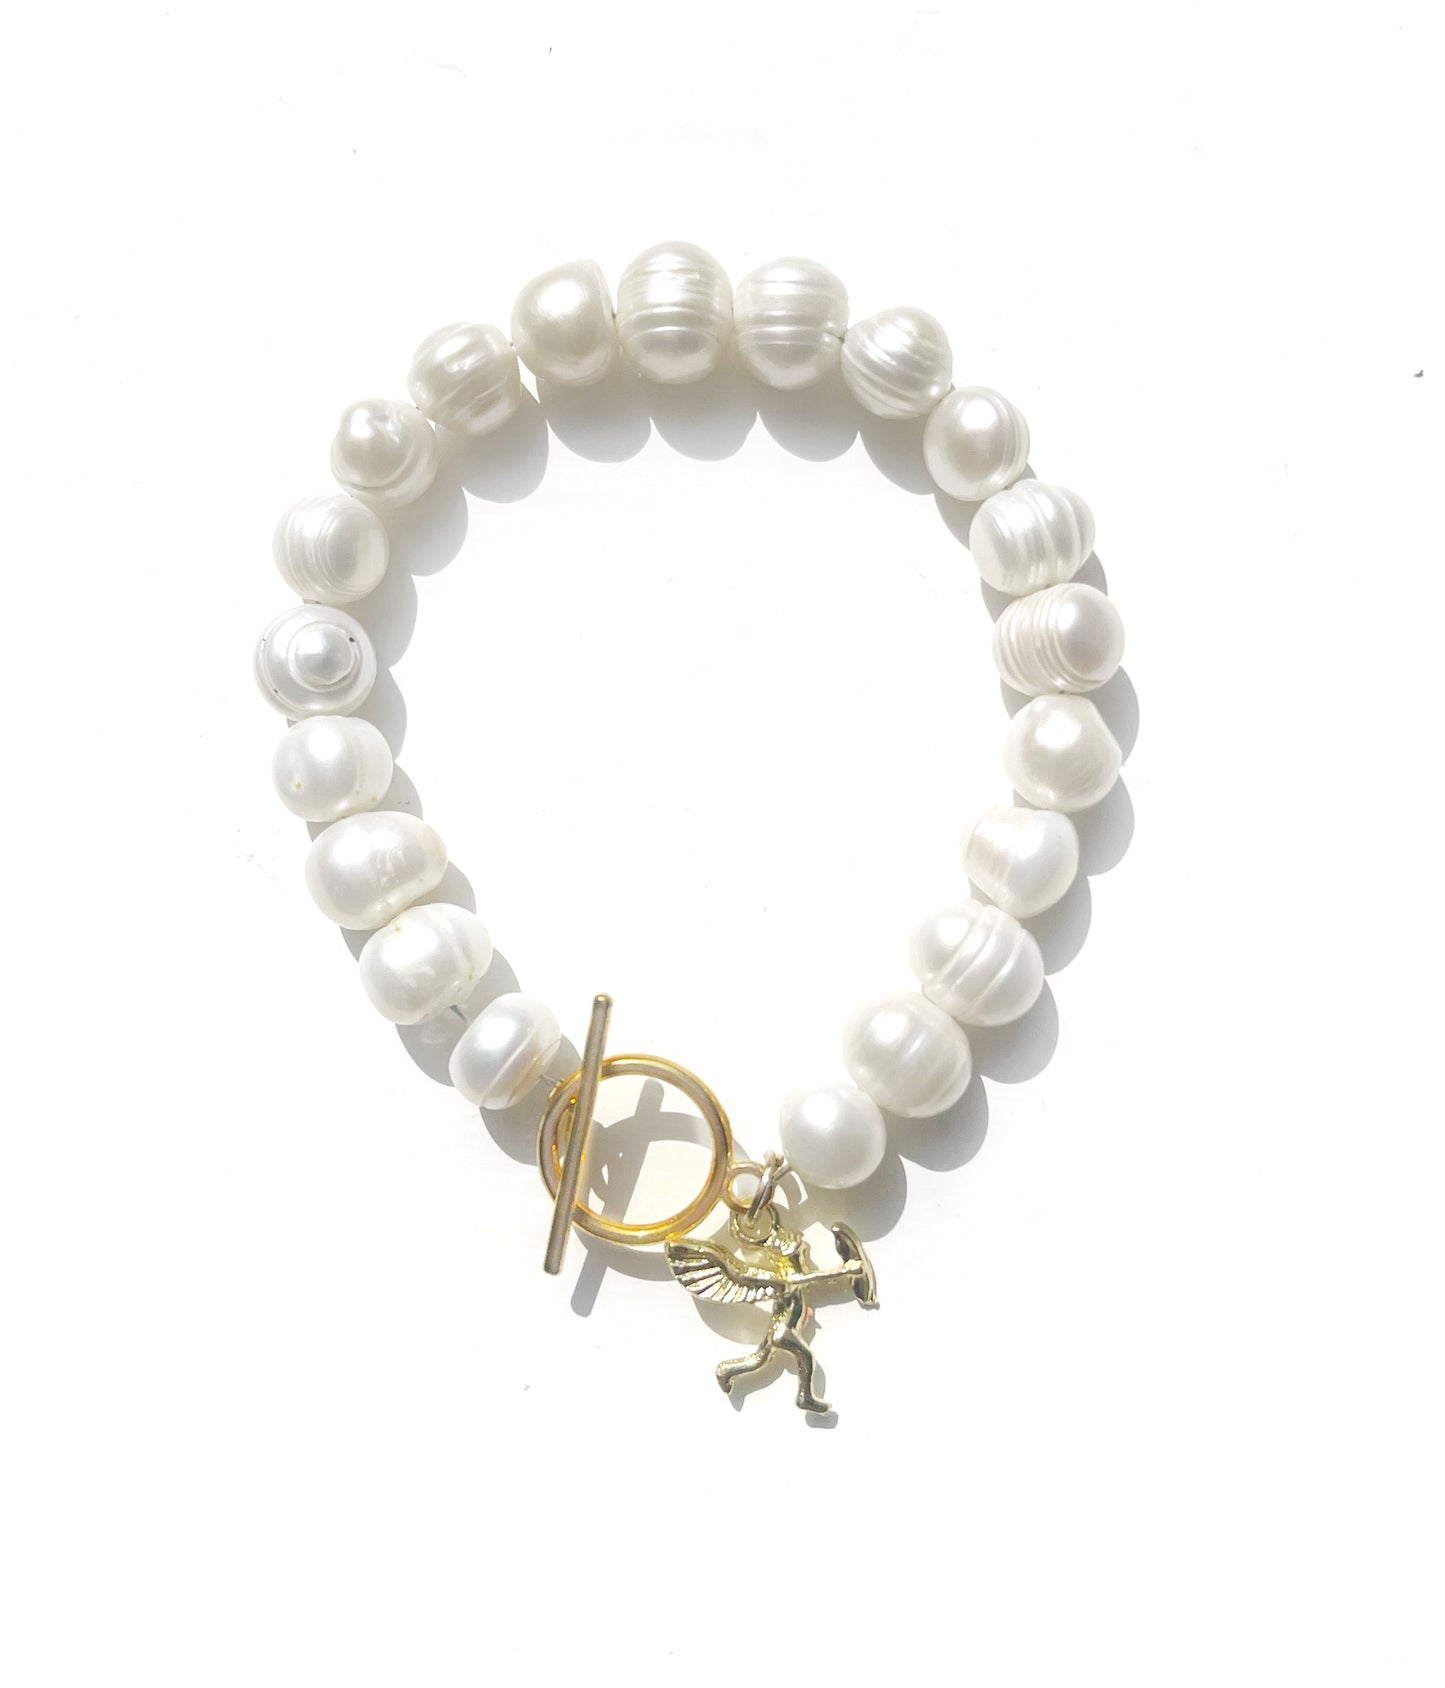 White pearl charm bracelet with dainty gold Cupid / cherub charm, classic white pearl jewelry, unique pearl jewelry, summer jewelry